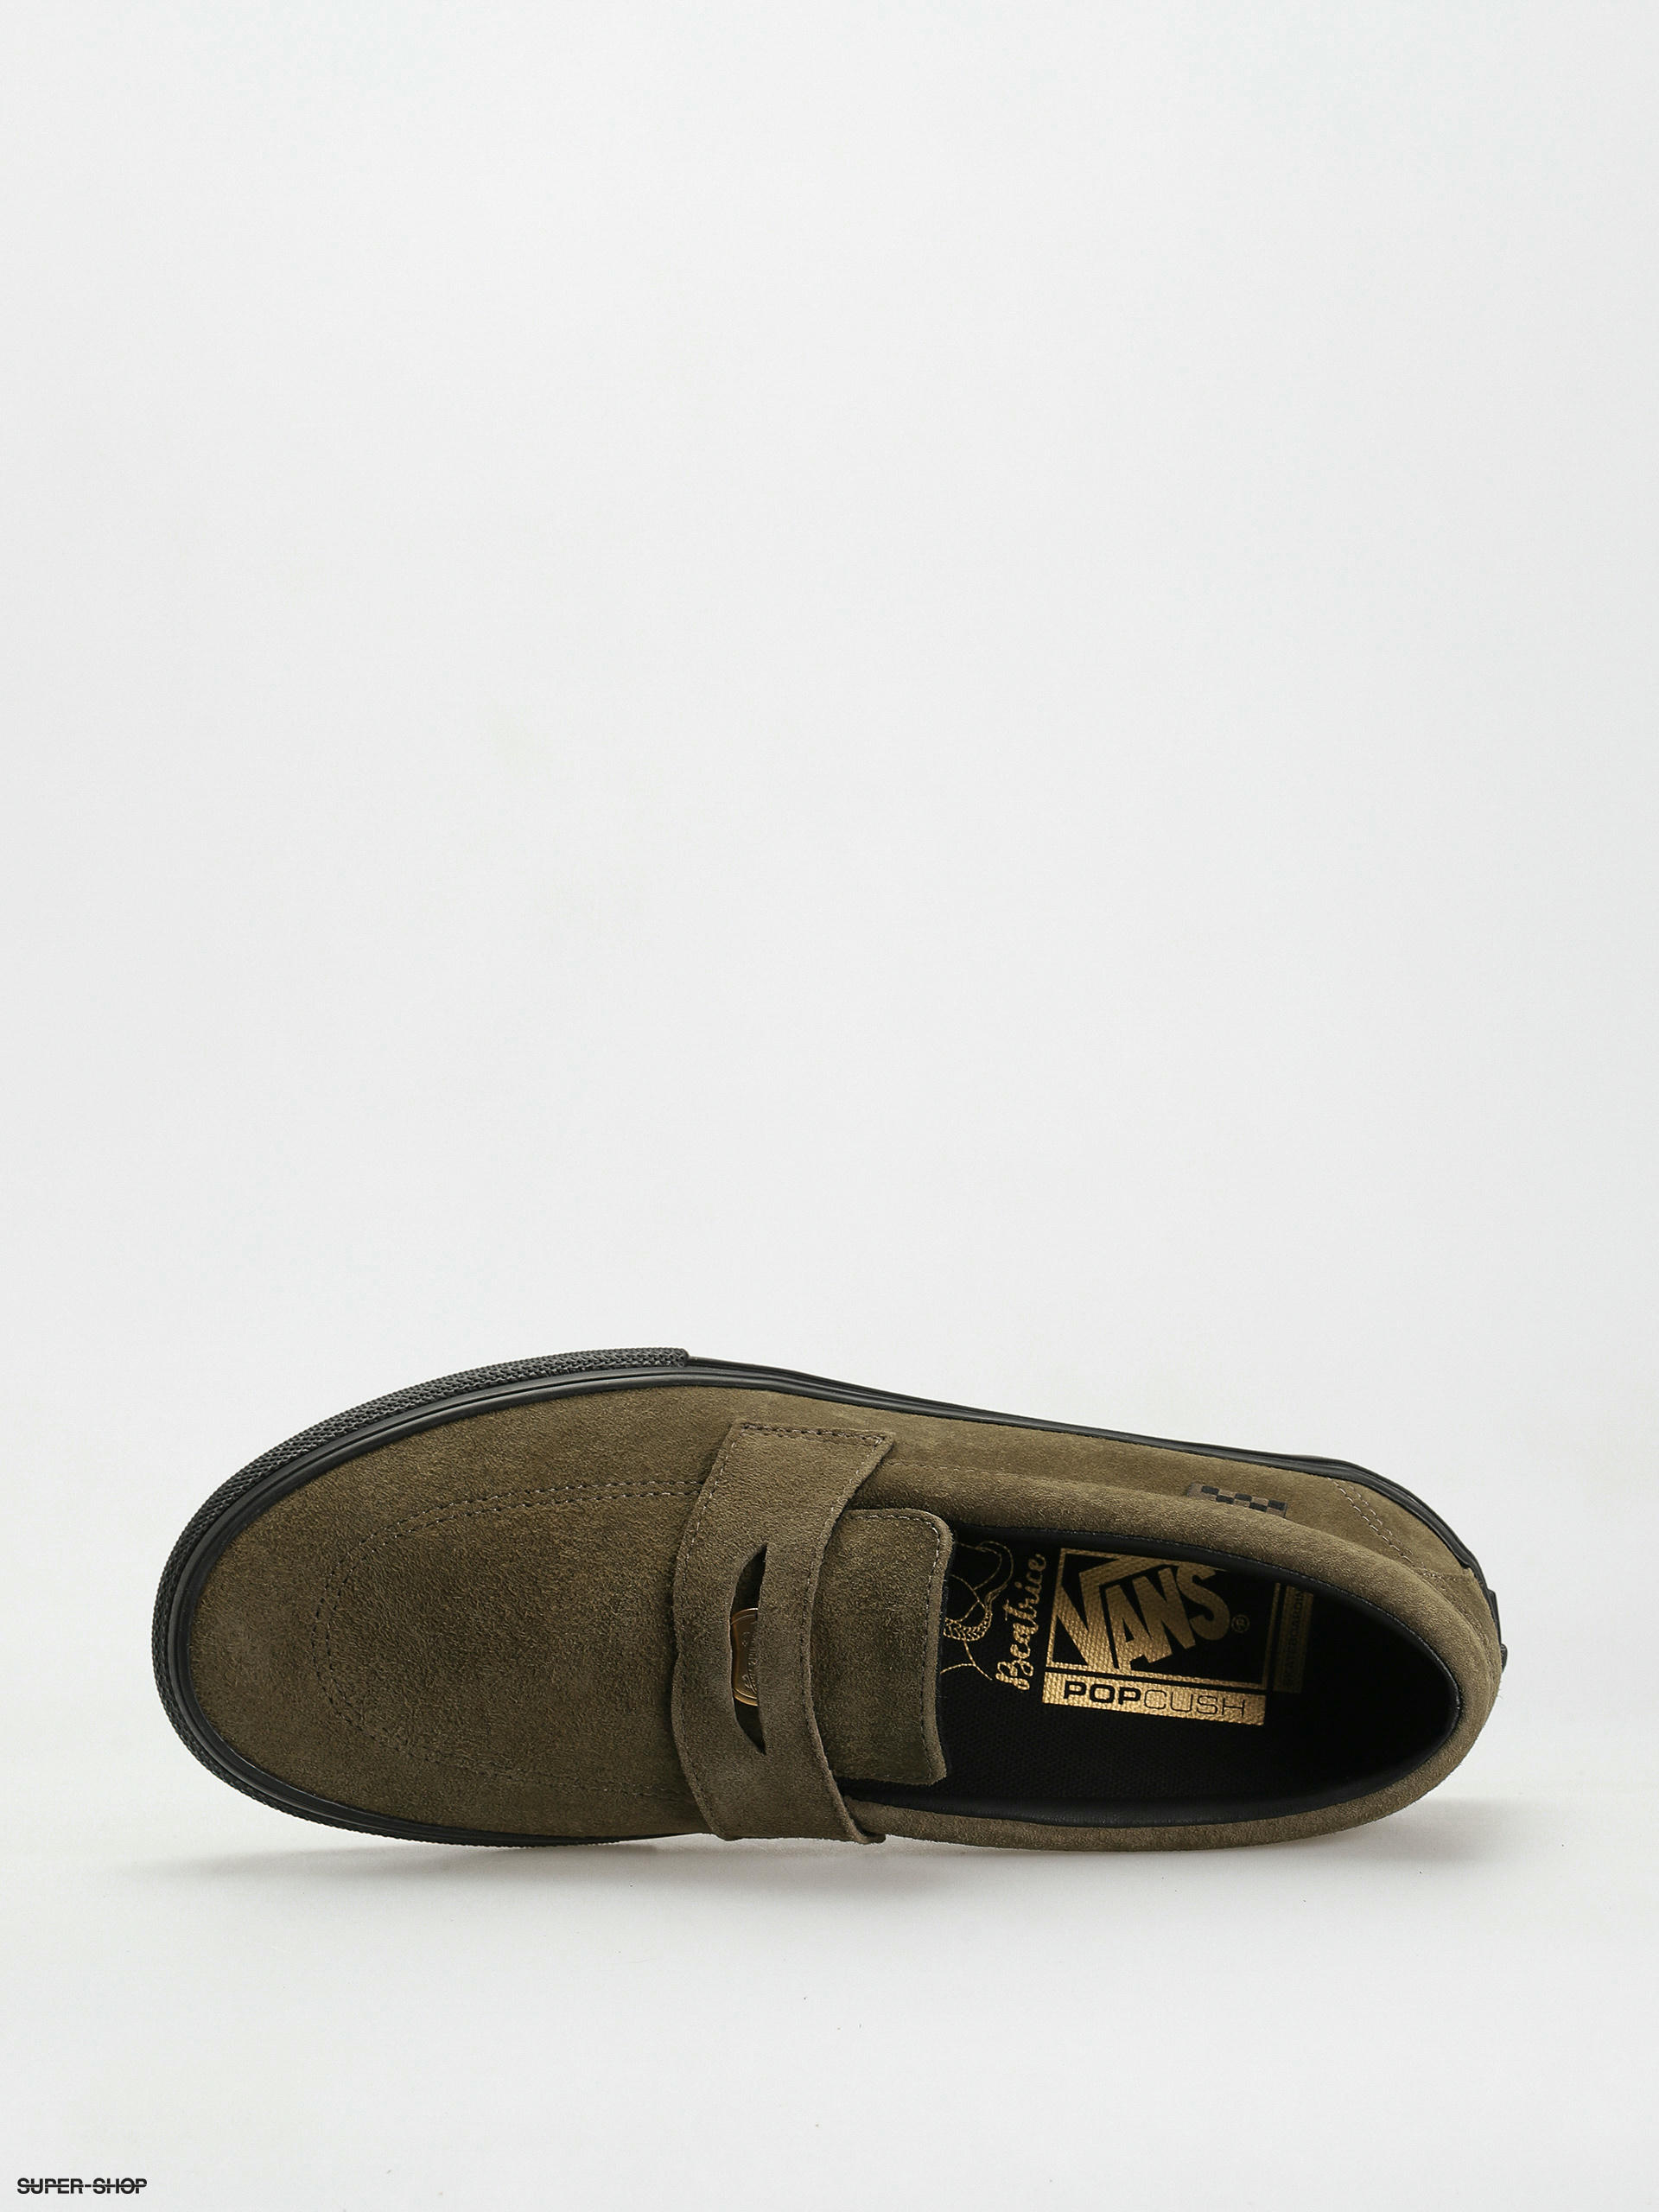 Vans Zahba Skate Style 53 X Beatrice Domond Shoes (dark olive)